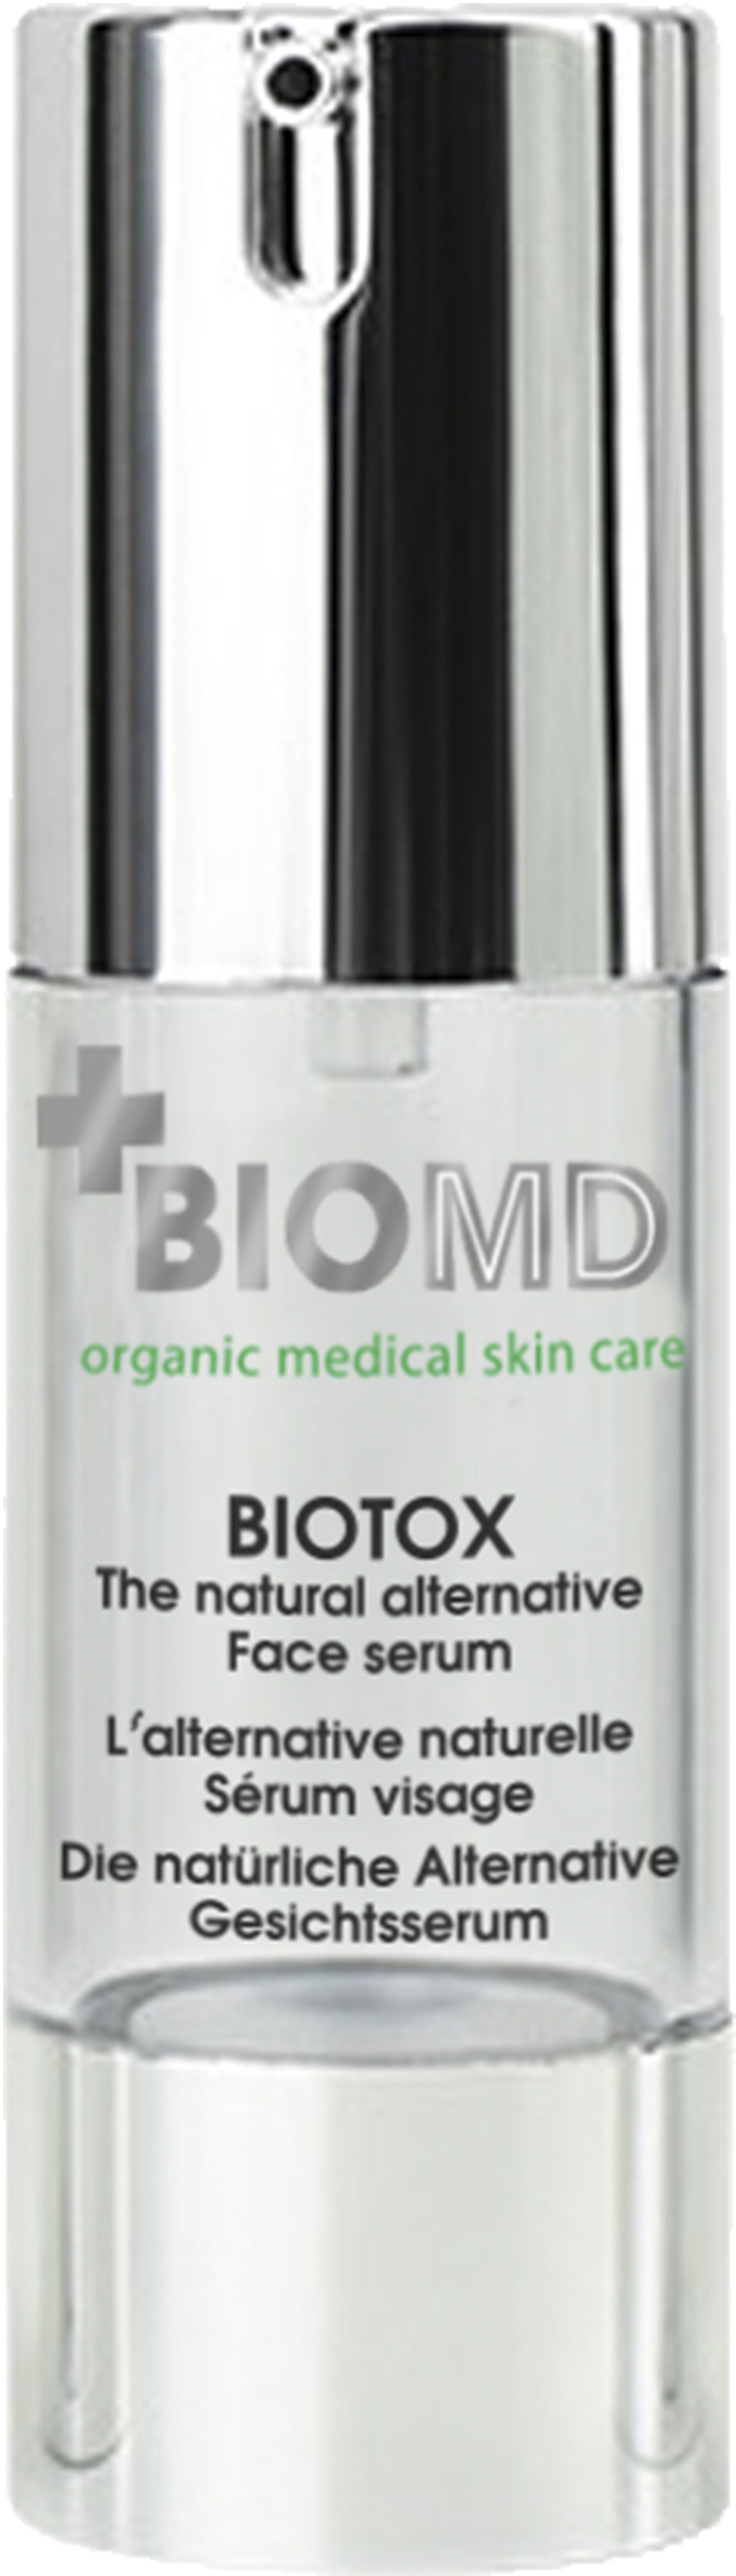 BioMD BIOTOX Face Serum 30 ml